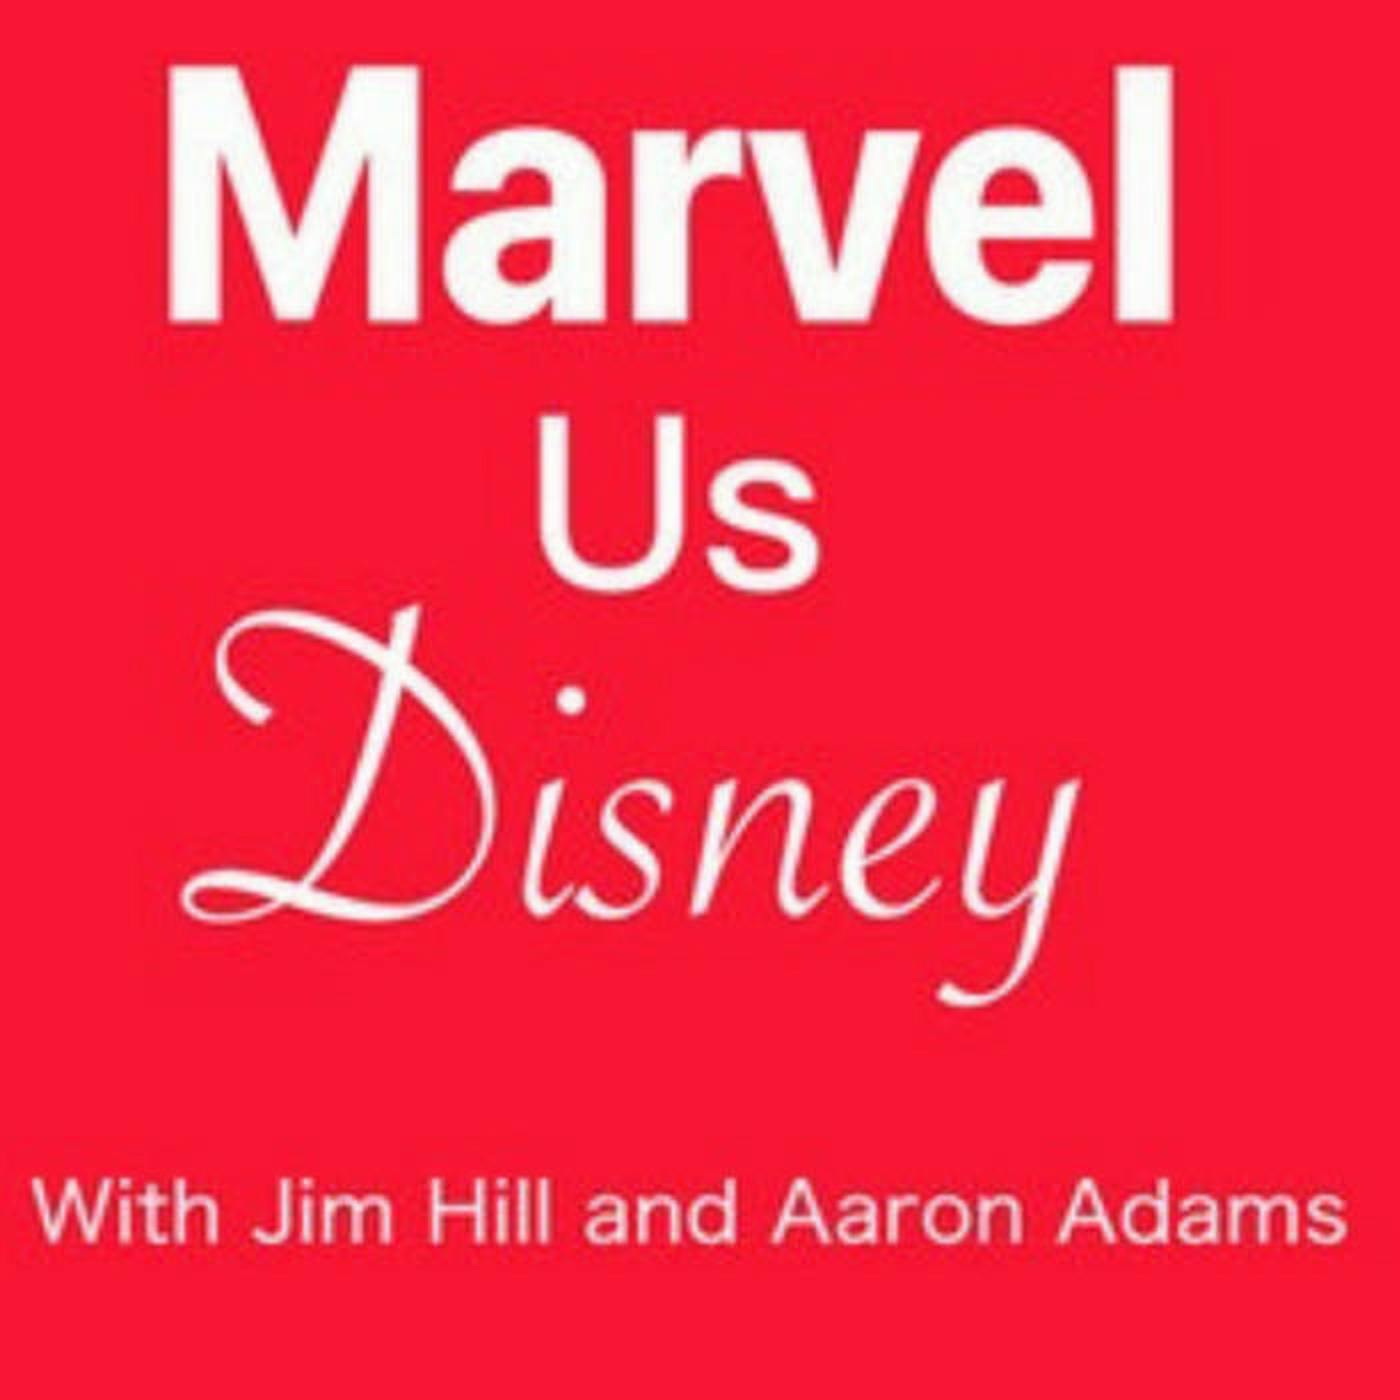 Marvel Us Disney with Aaron Adams Episode 196: “Spider-Man 2” for the PS5 delivers a killer Kraven